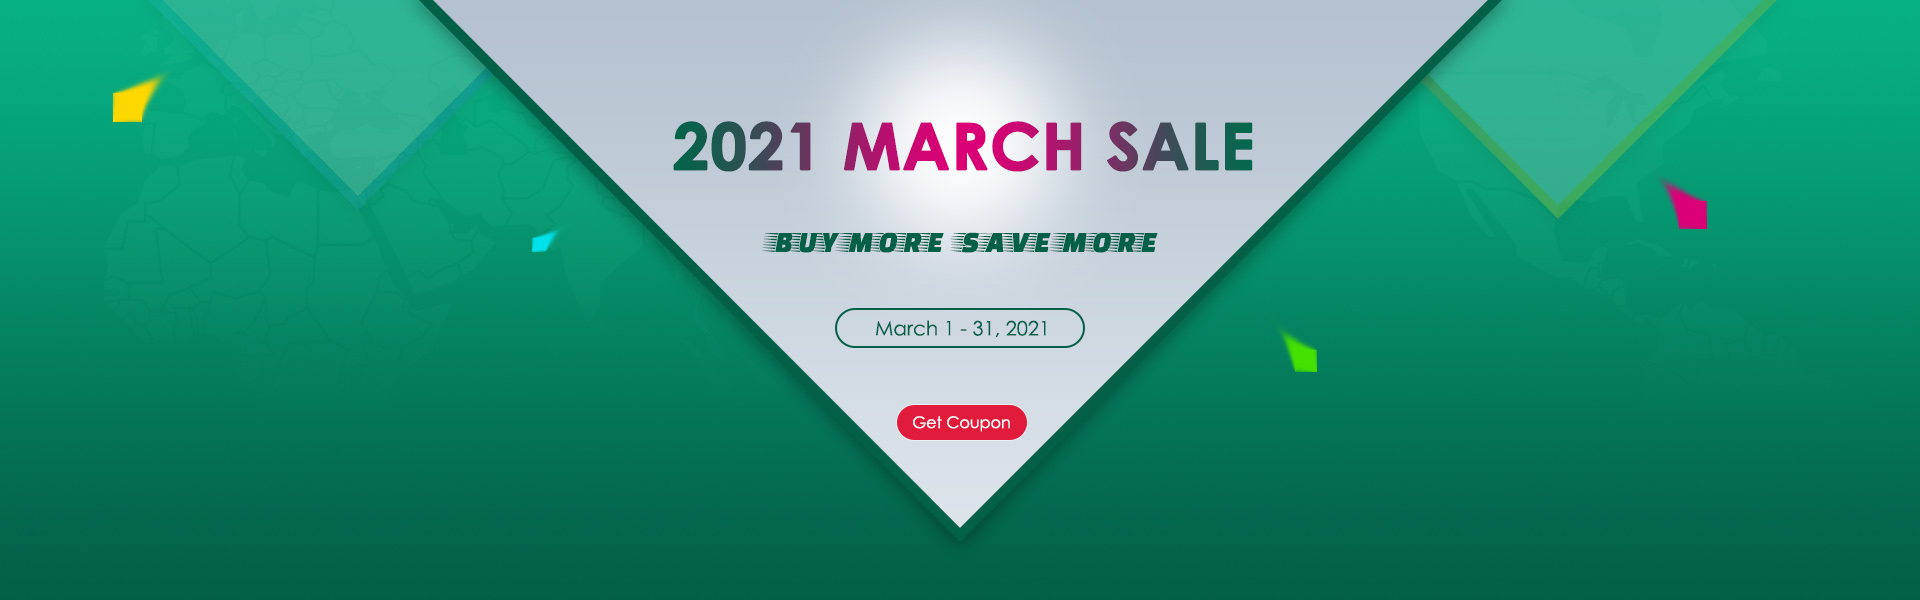 2021 March Sale